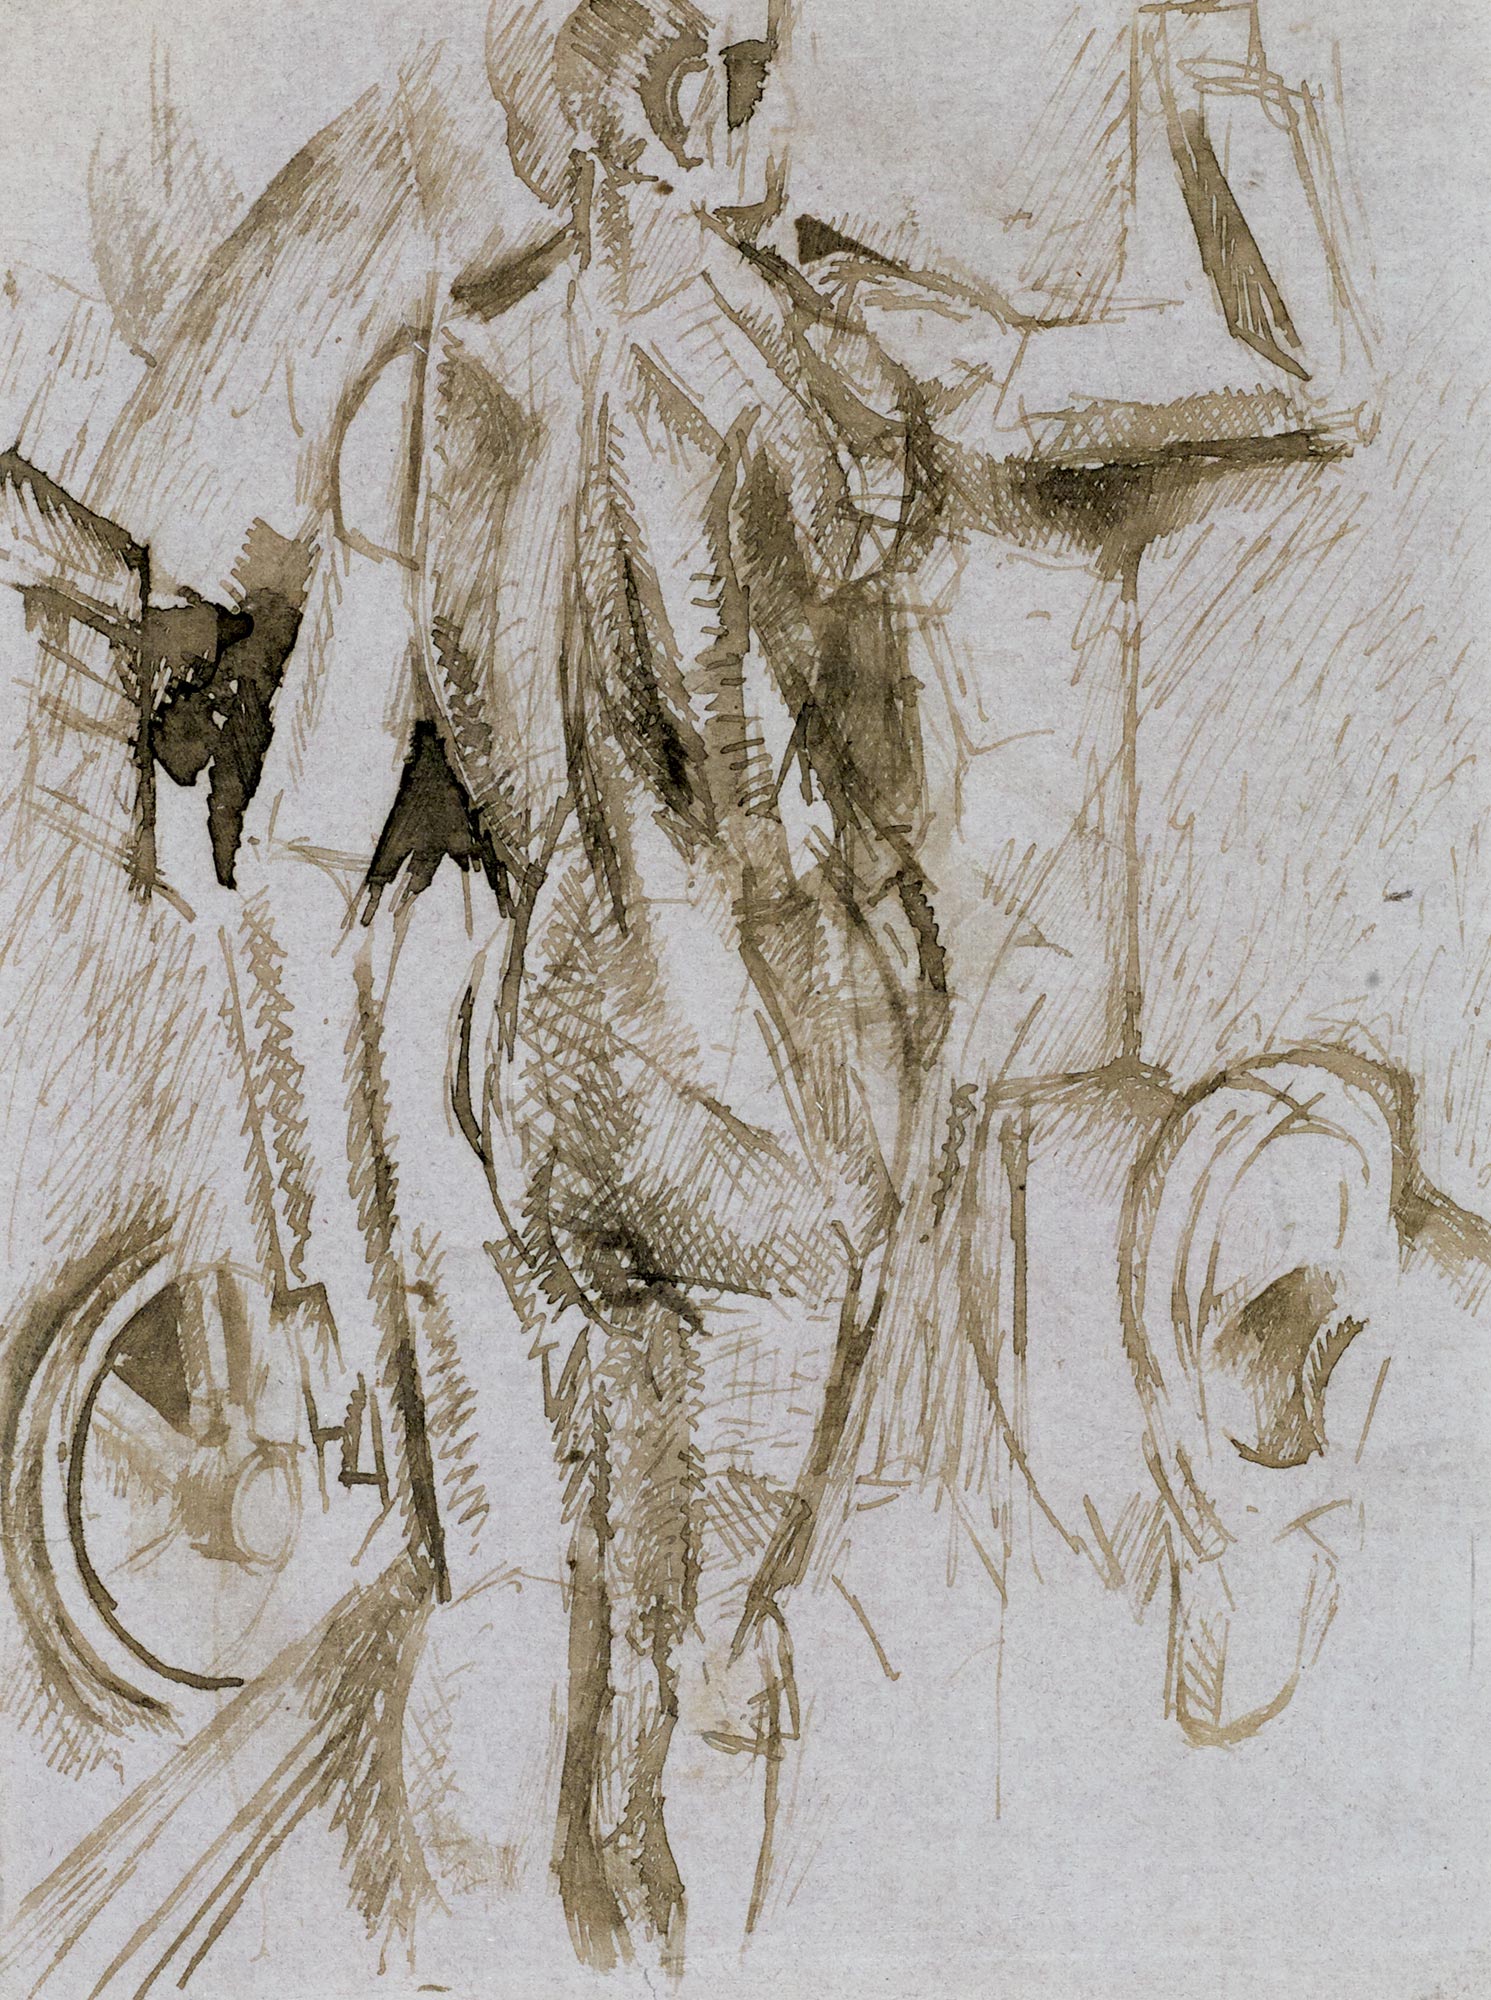 Mario Sironi, Nude (Standing Figure), 1914